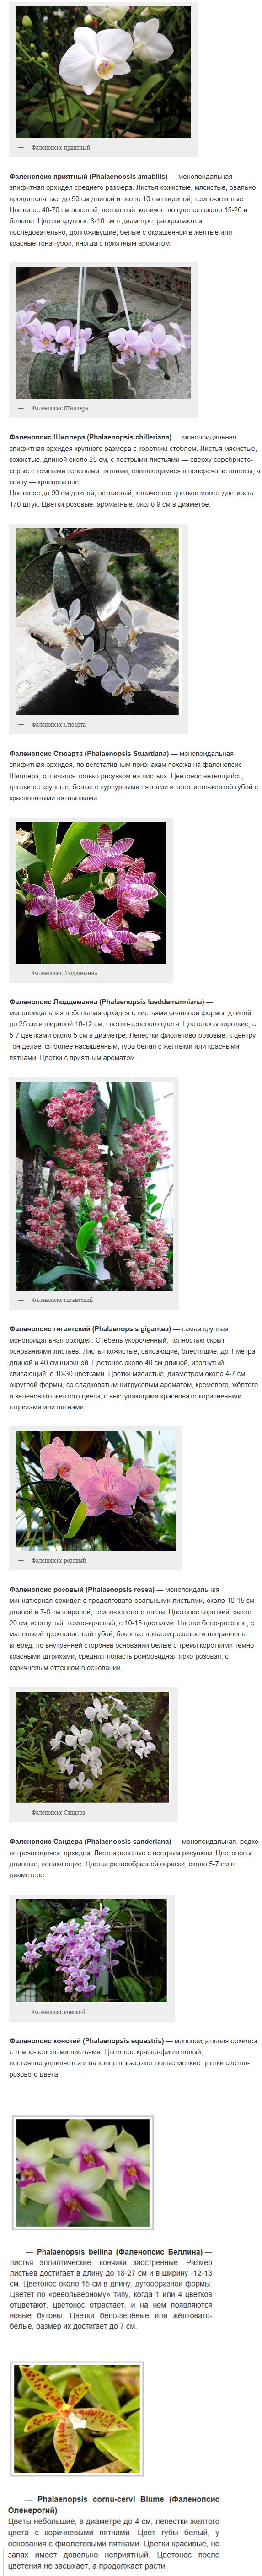 фаленопсис - уход за орхидеями в домашних условиях